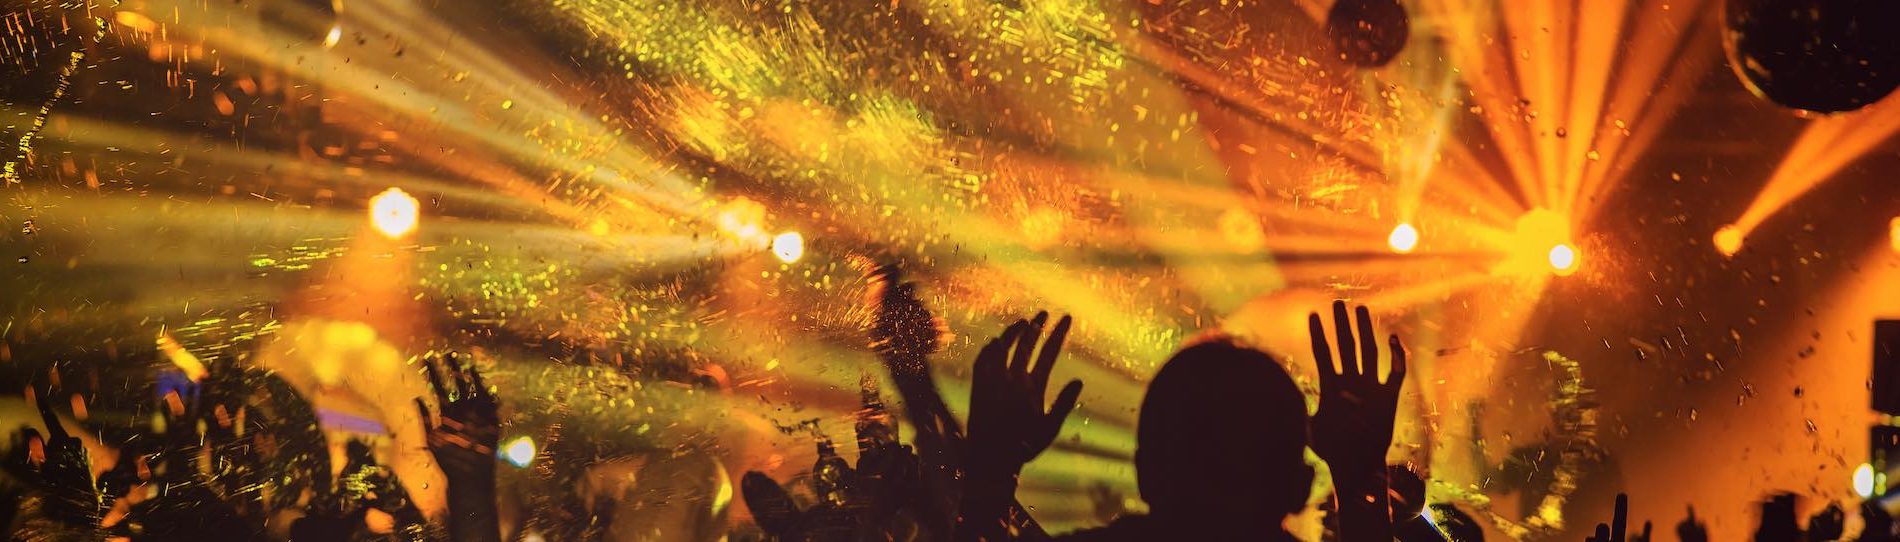 crowd dancing in nightclub with flashing lights